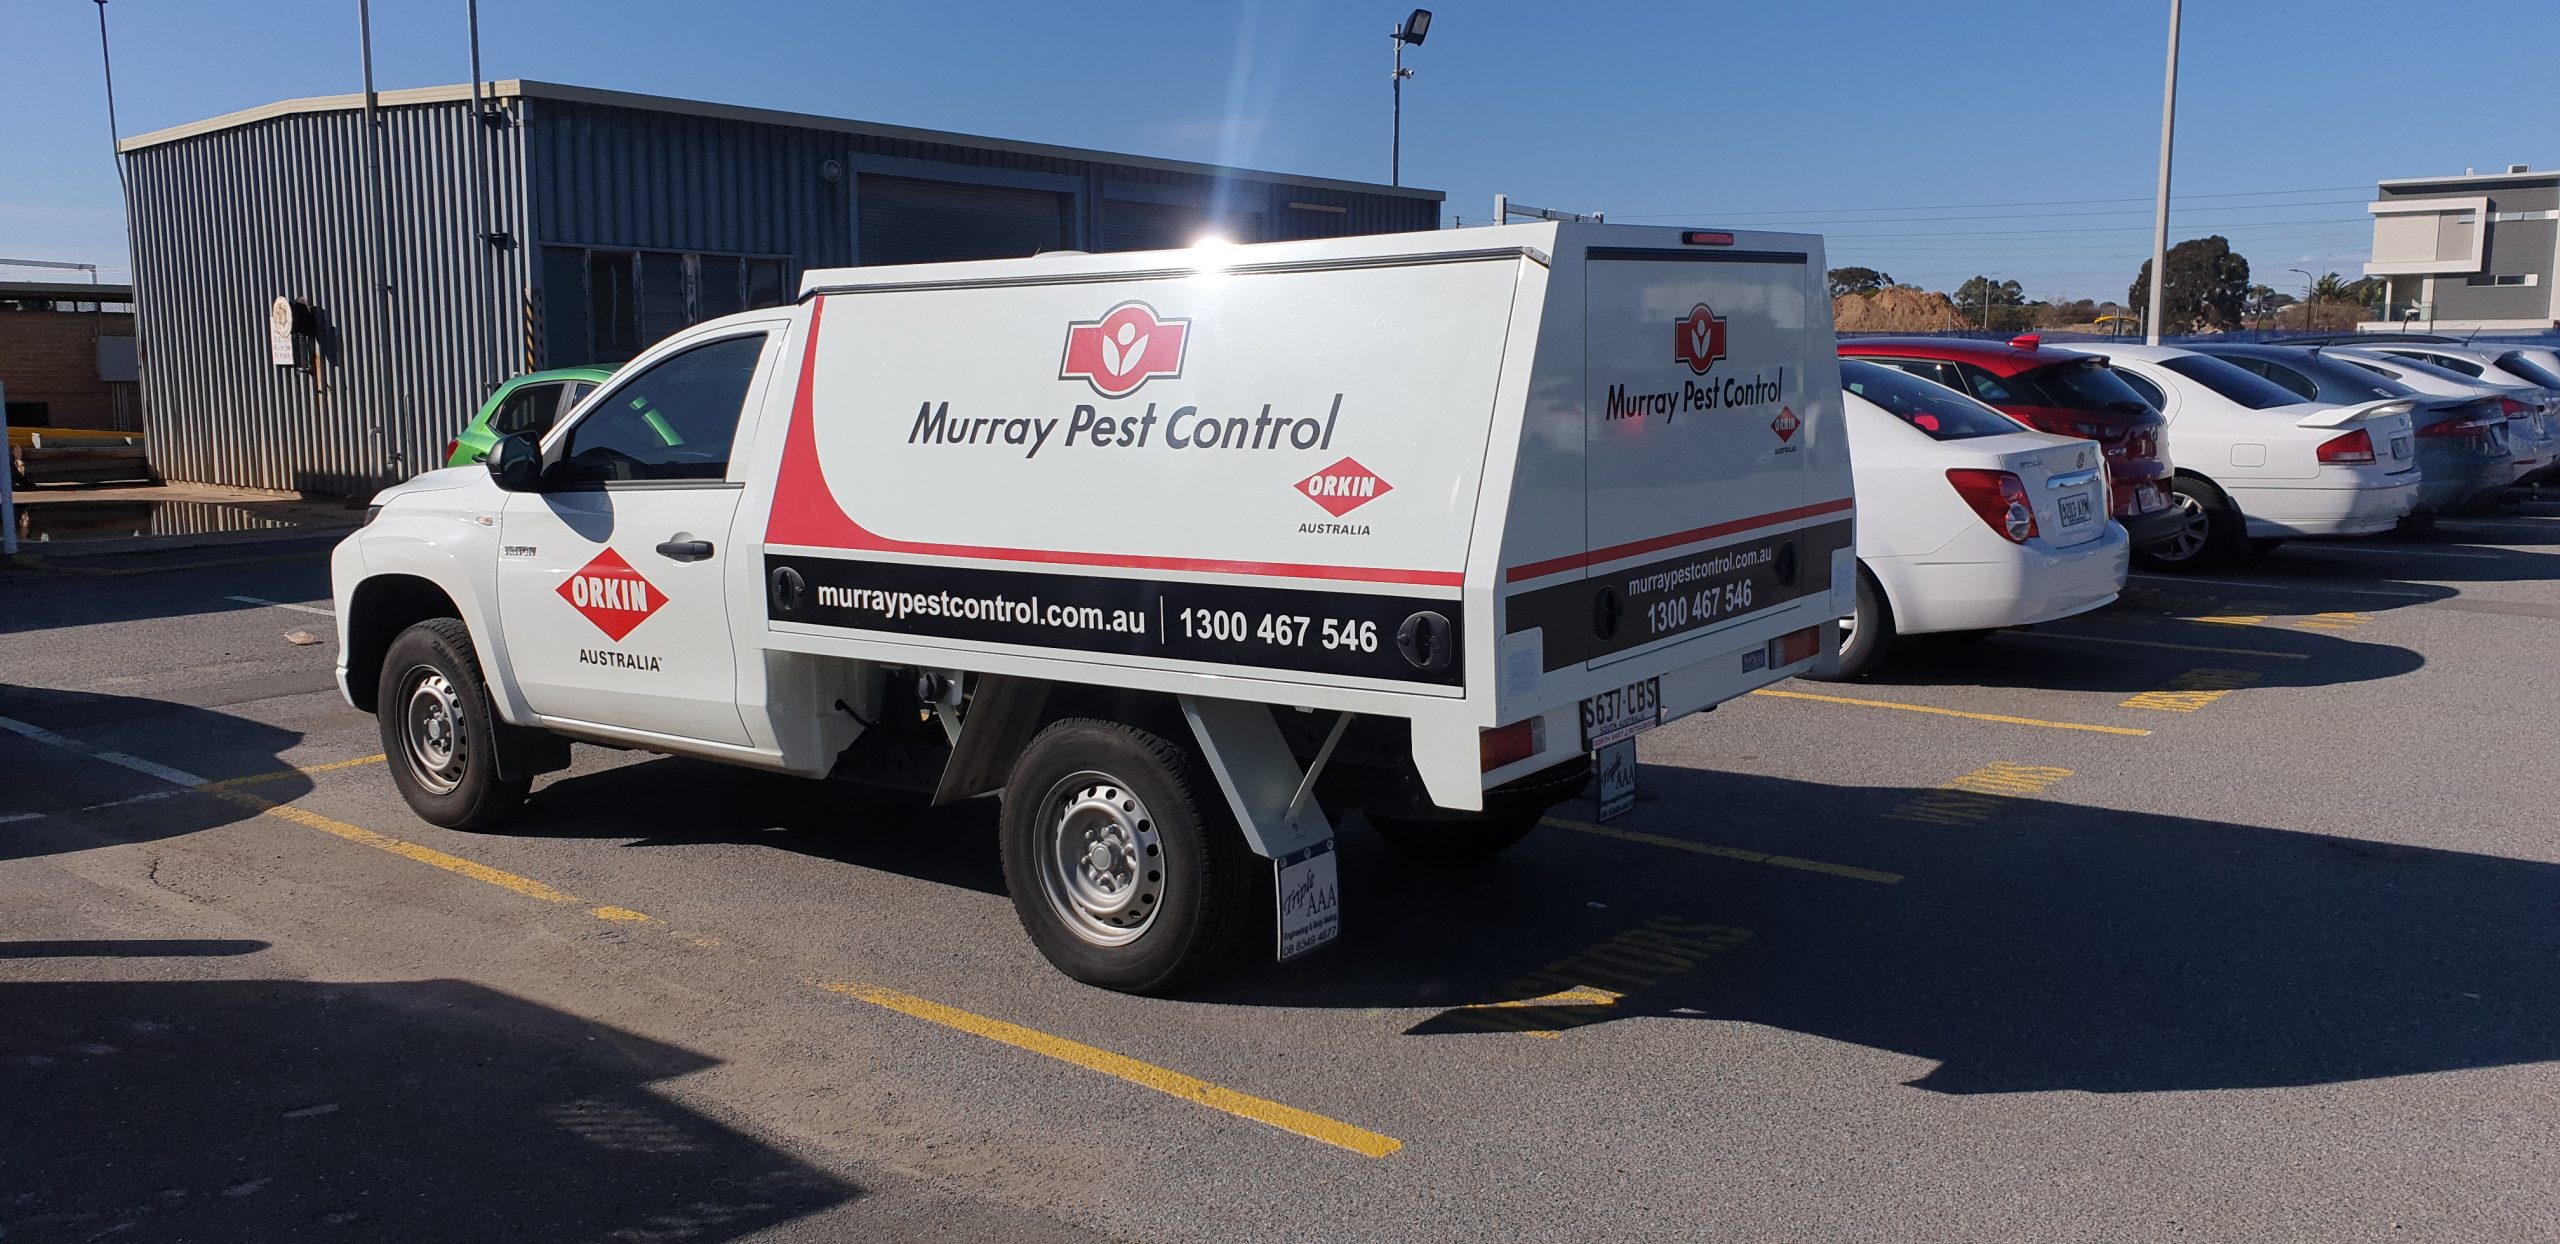 Murray Pest Control ute in car park